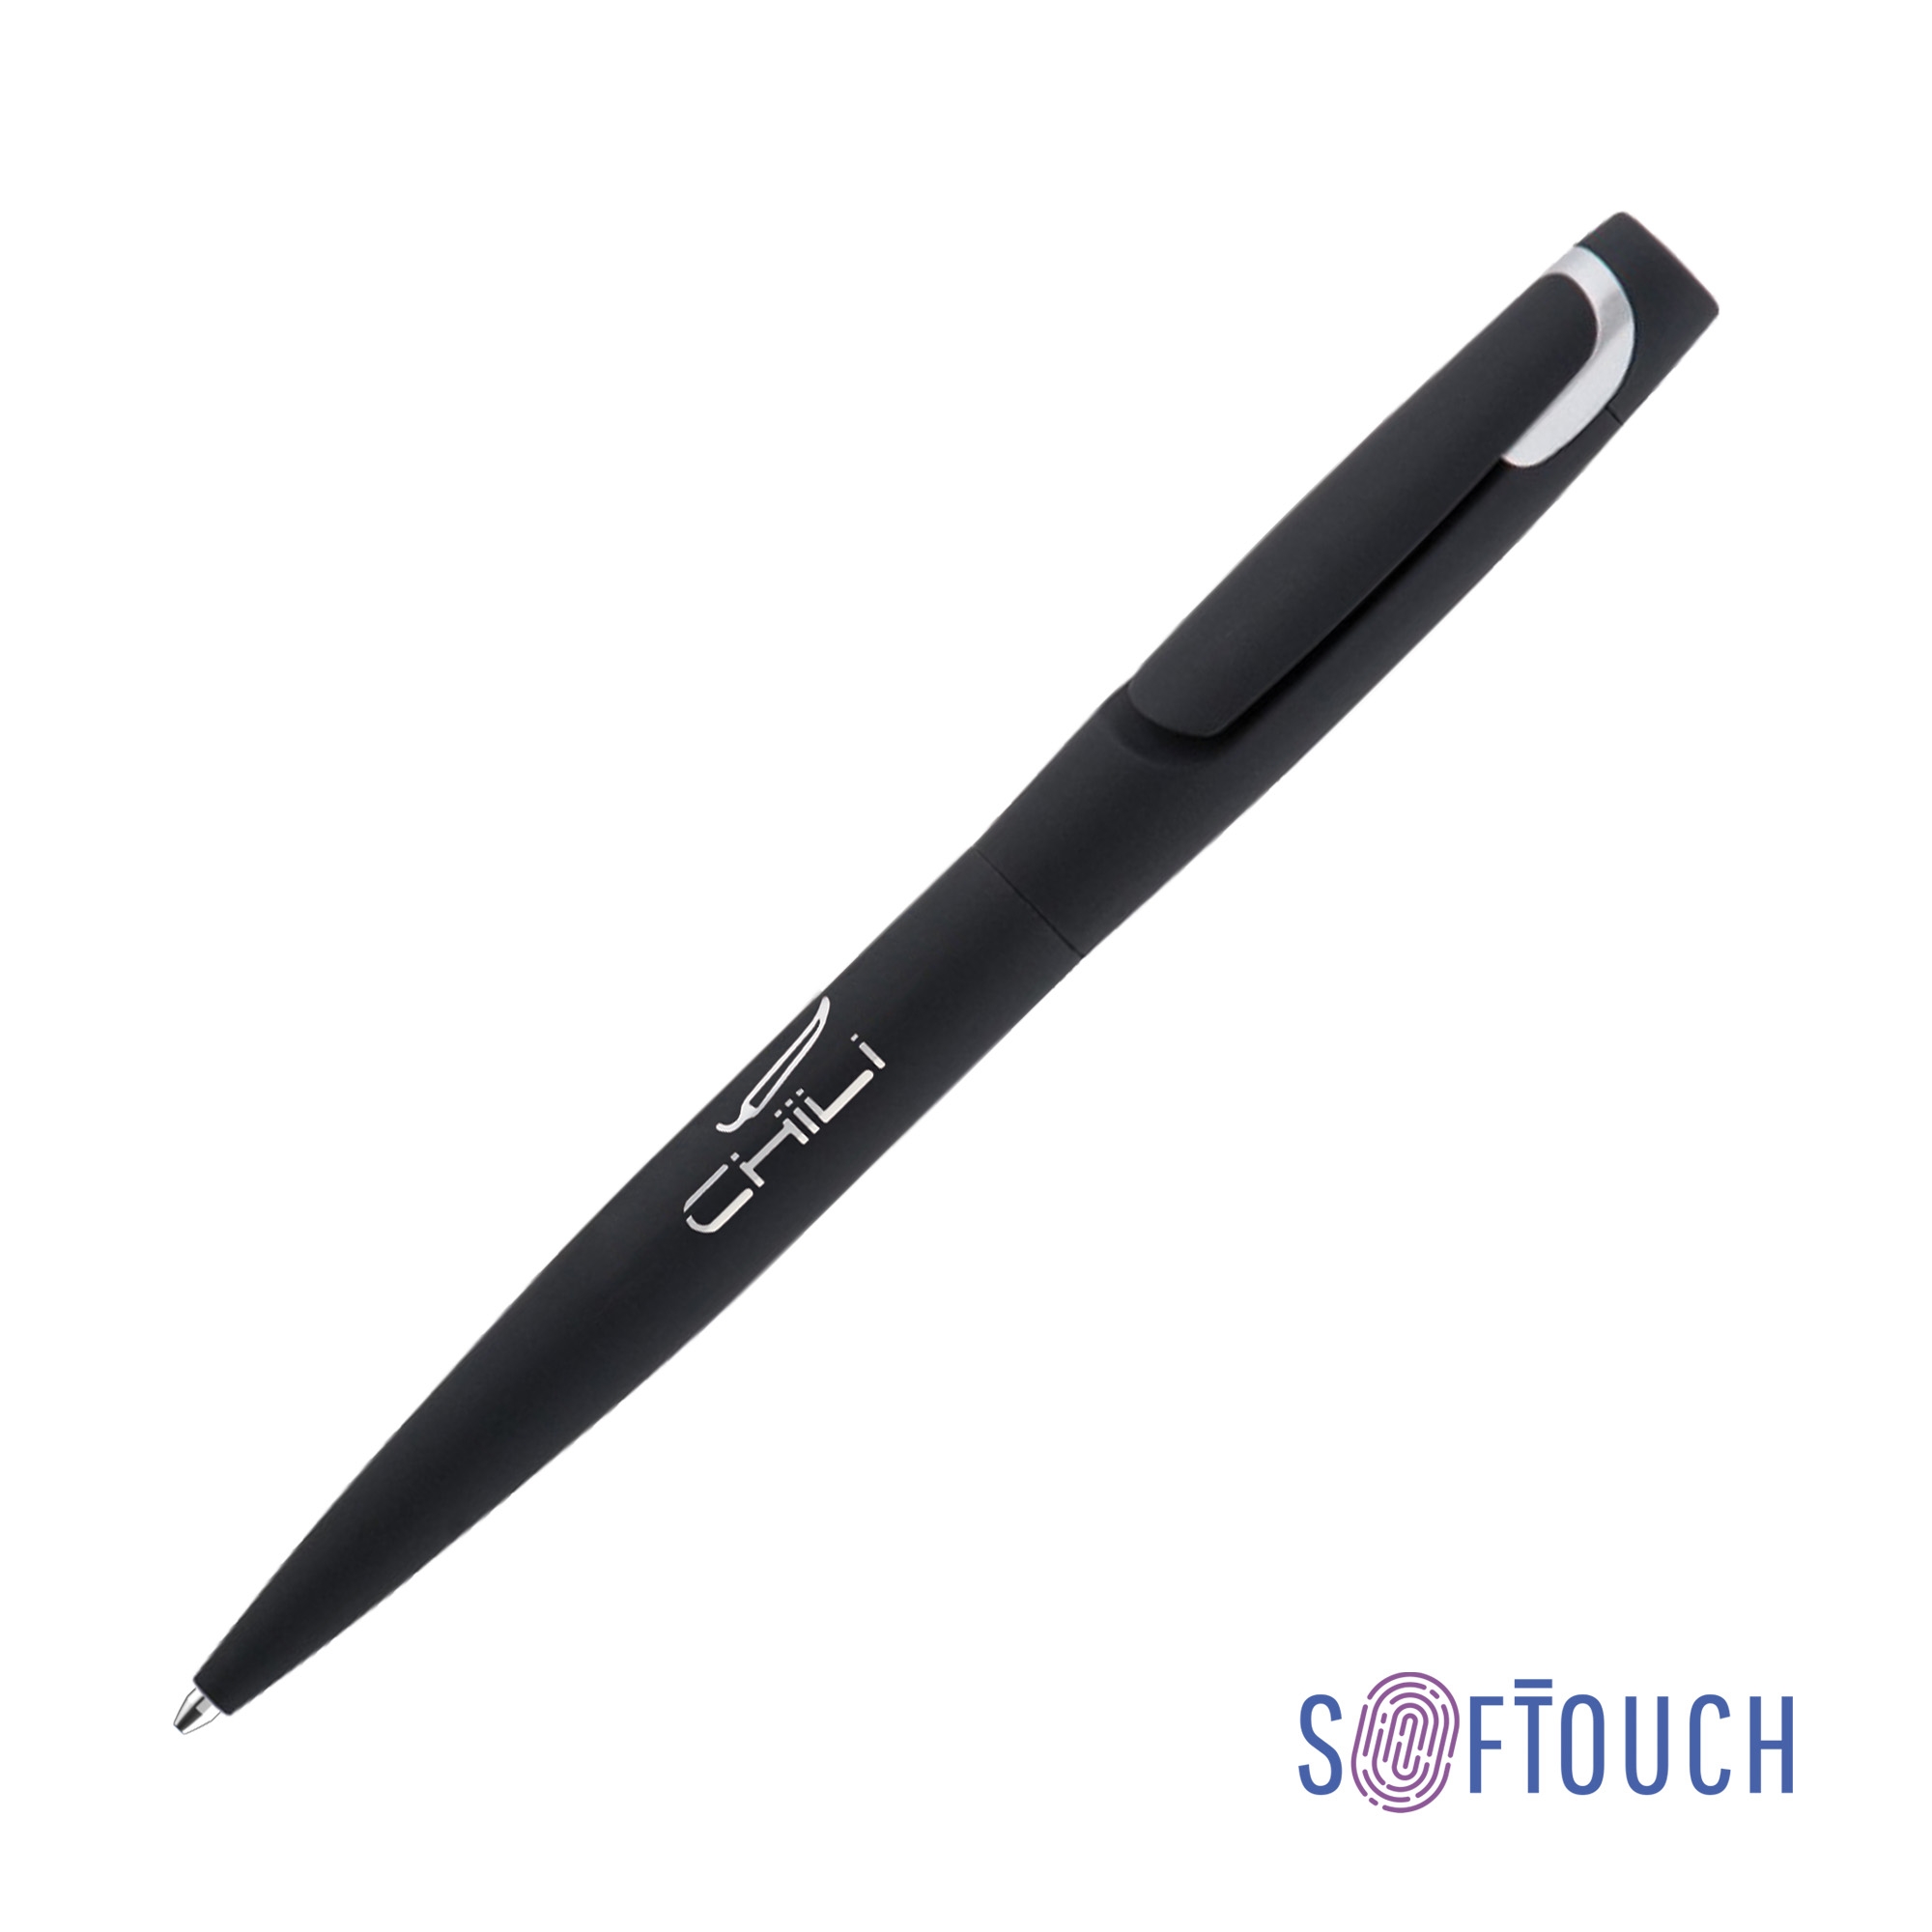 Ручка шариковая "Saturn" покрытие soft touch, черный, металл/пластик/soft touch